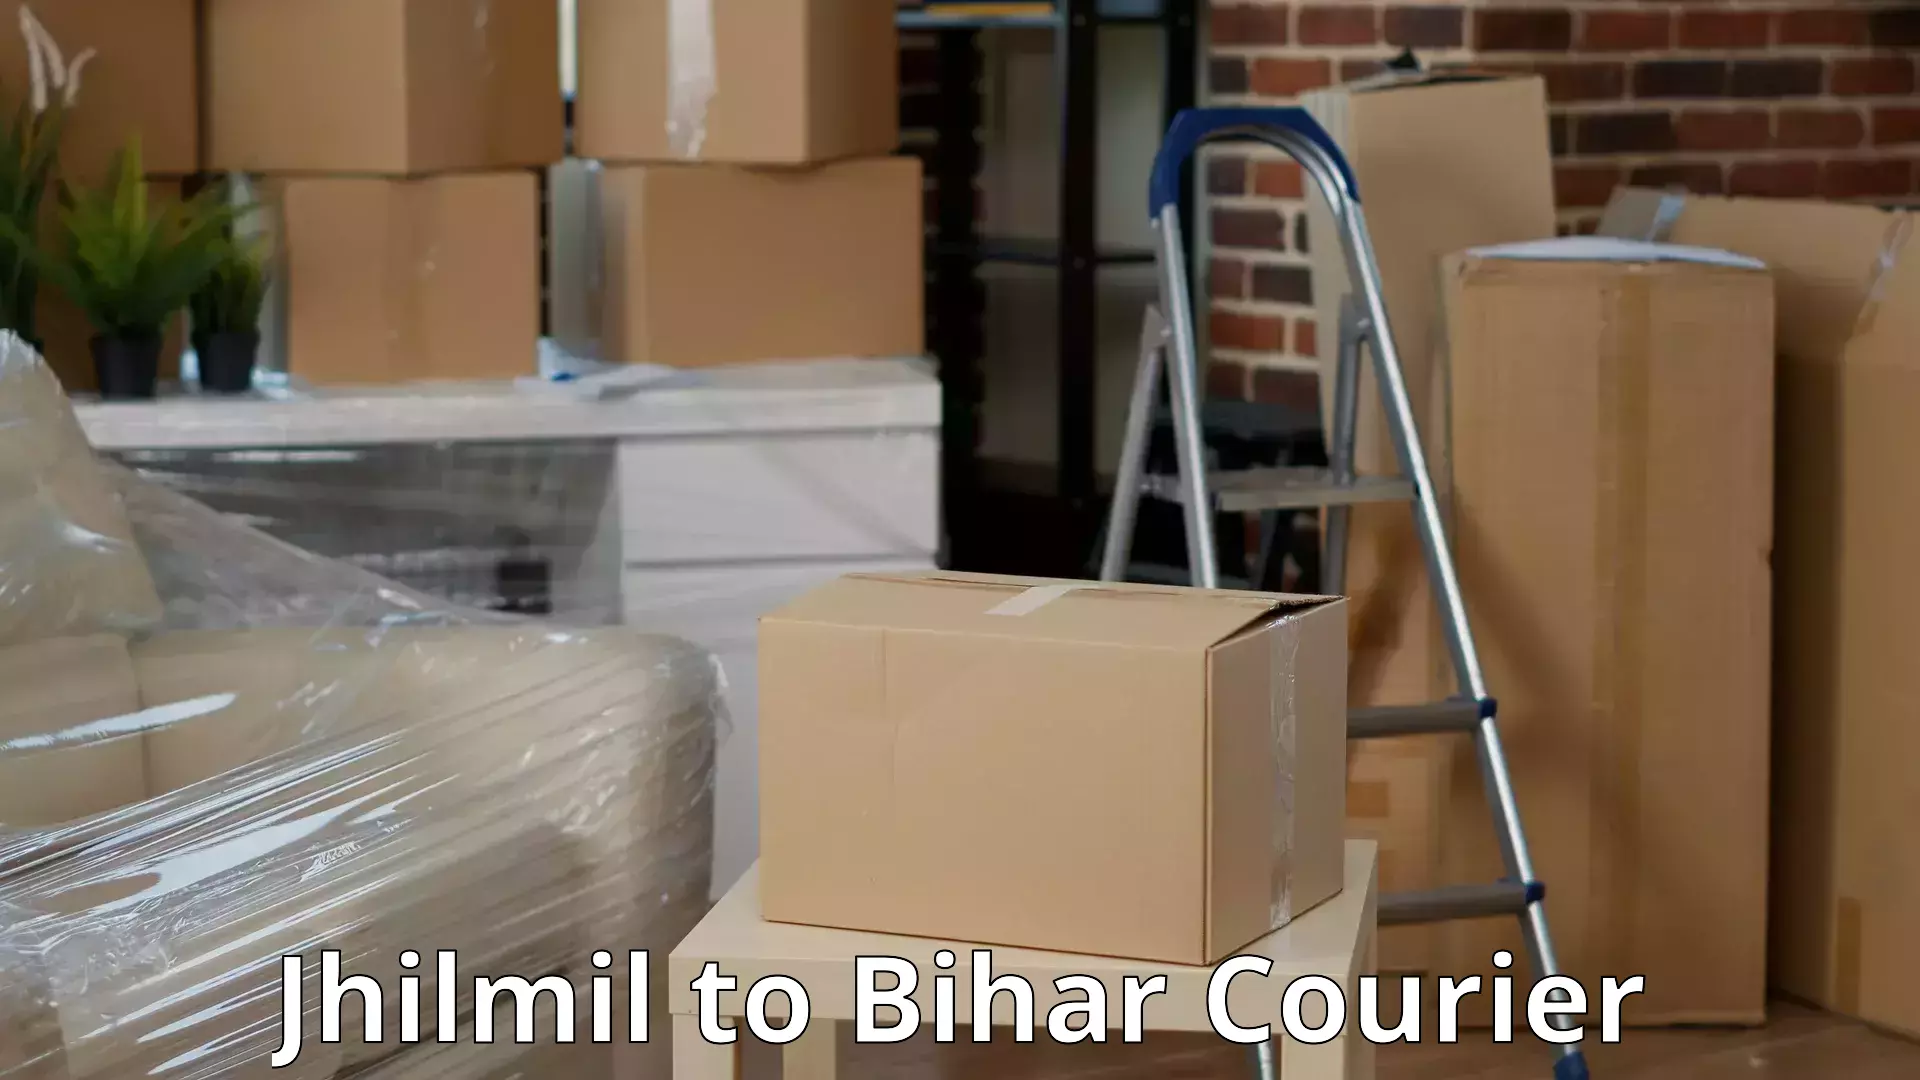 Professional moving strategies Jhilmil to Bihar